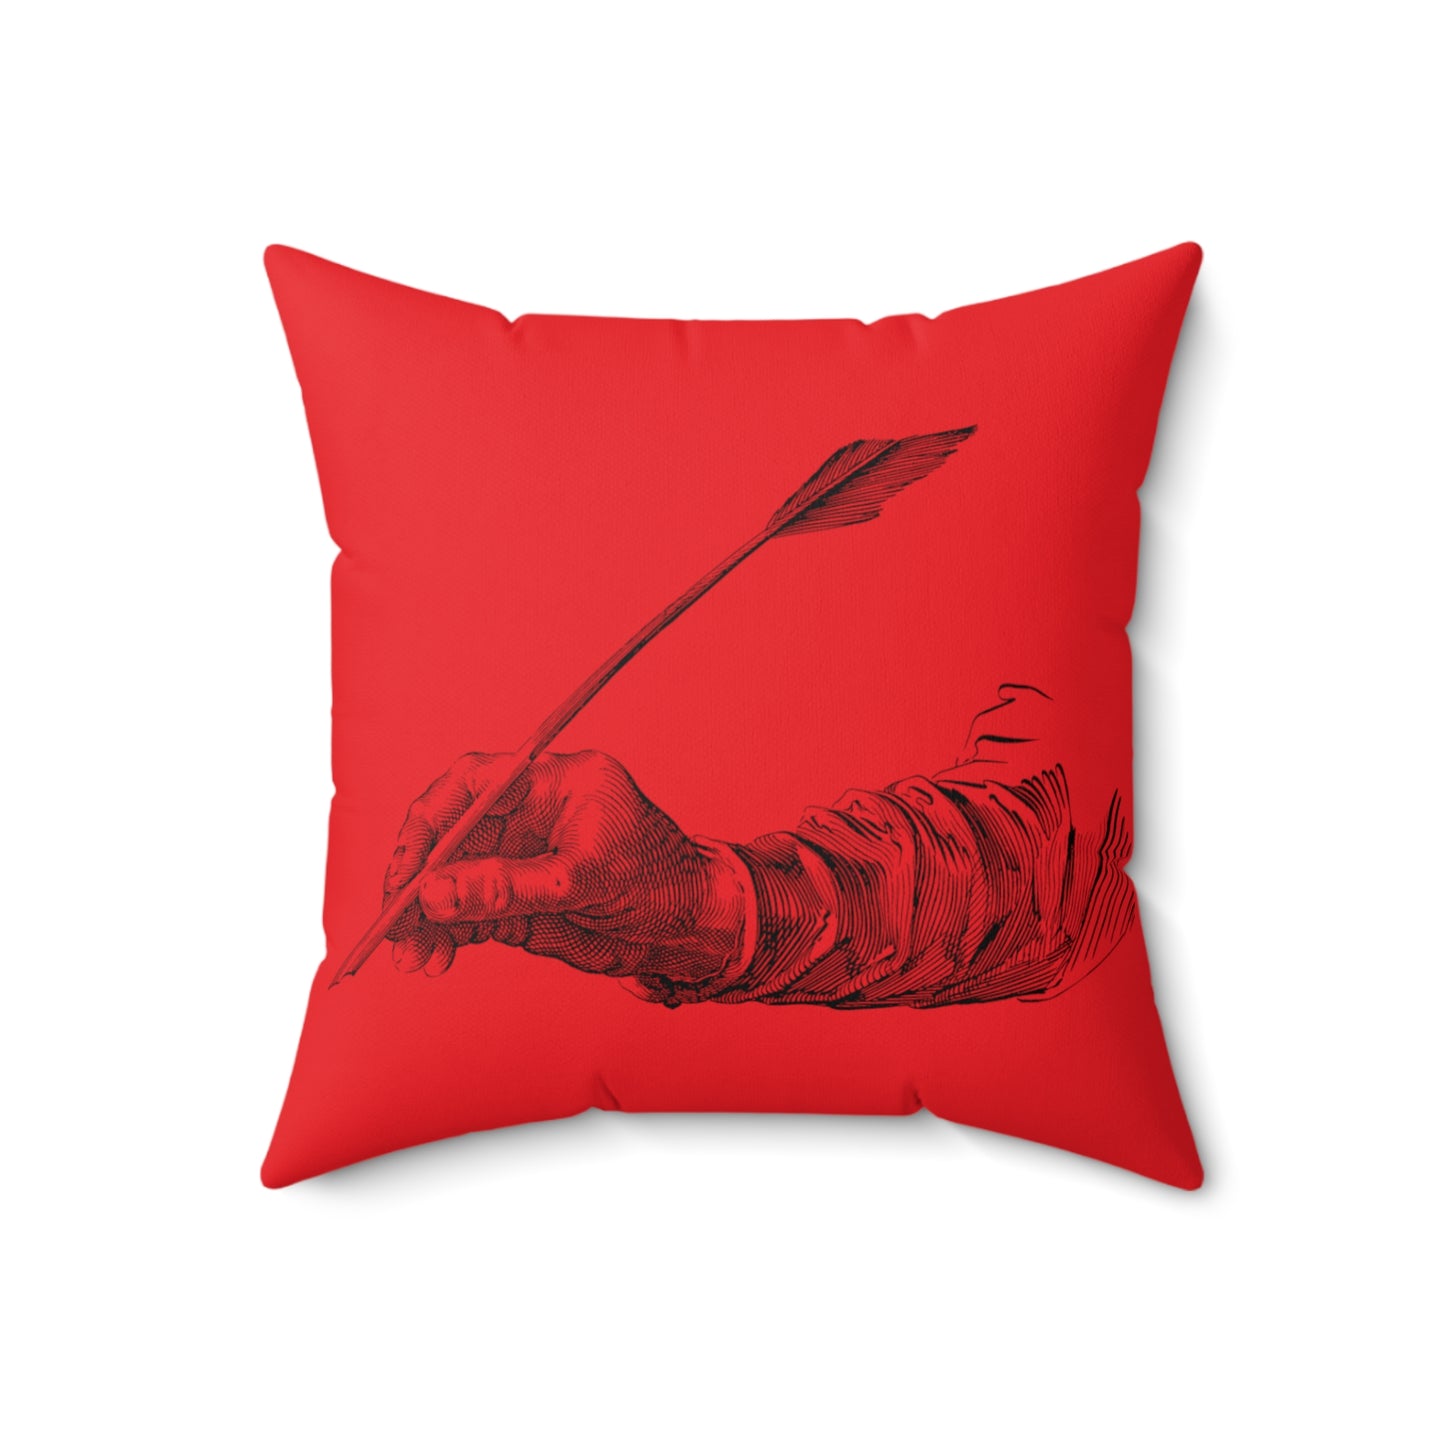 Spun Polyester Square Pillow: Writing Red